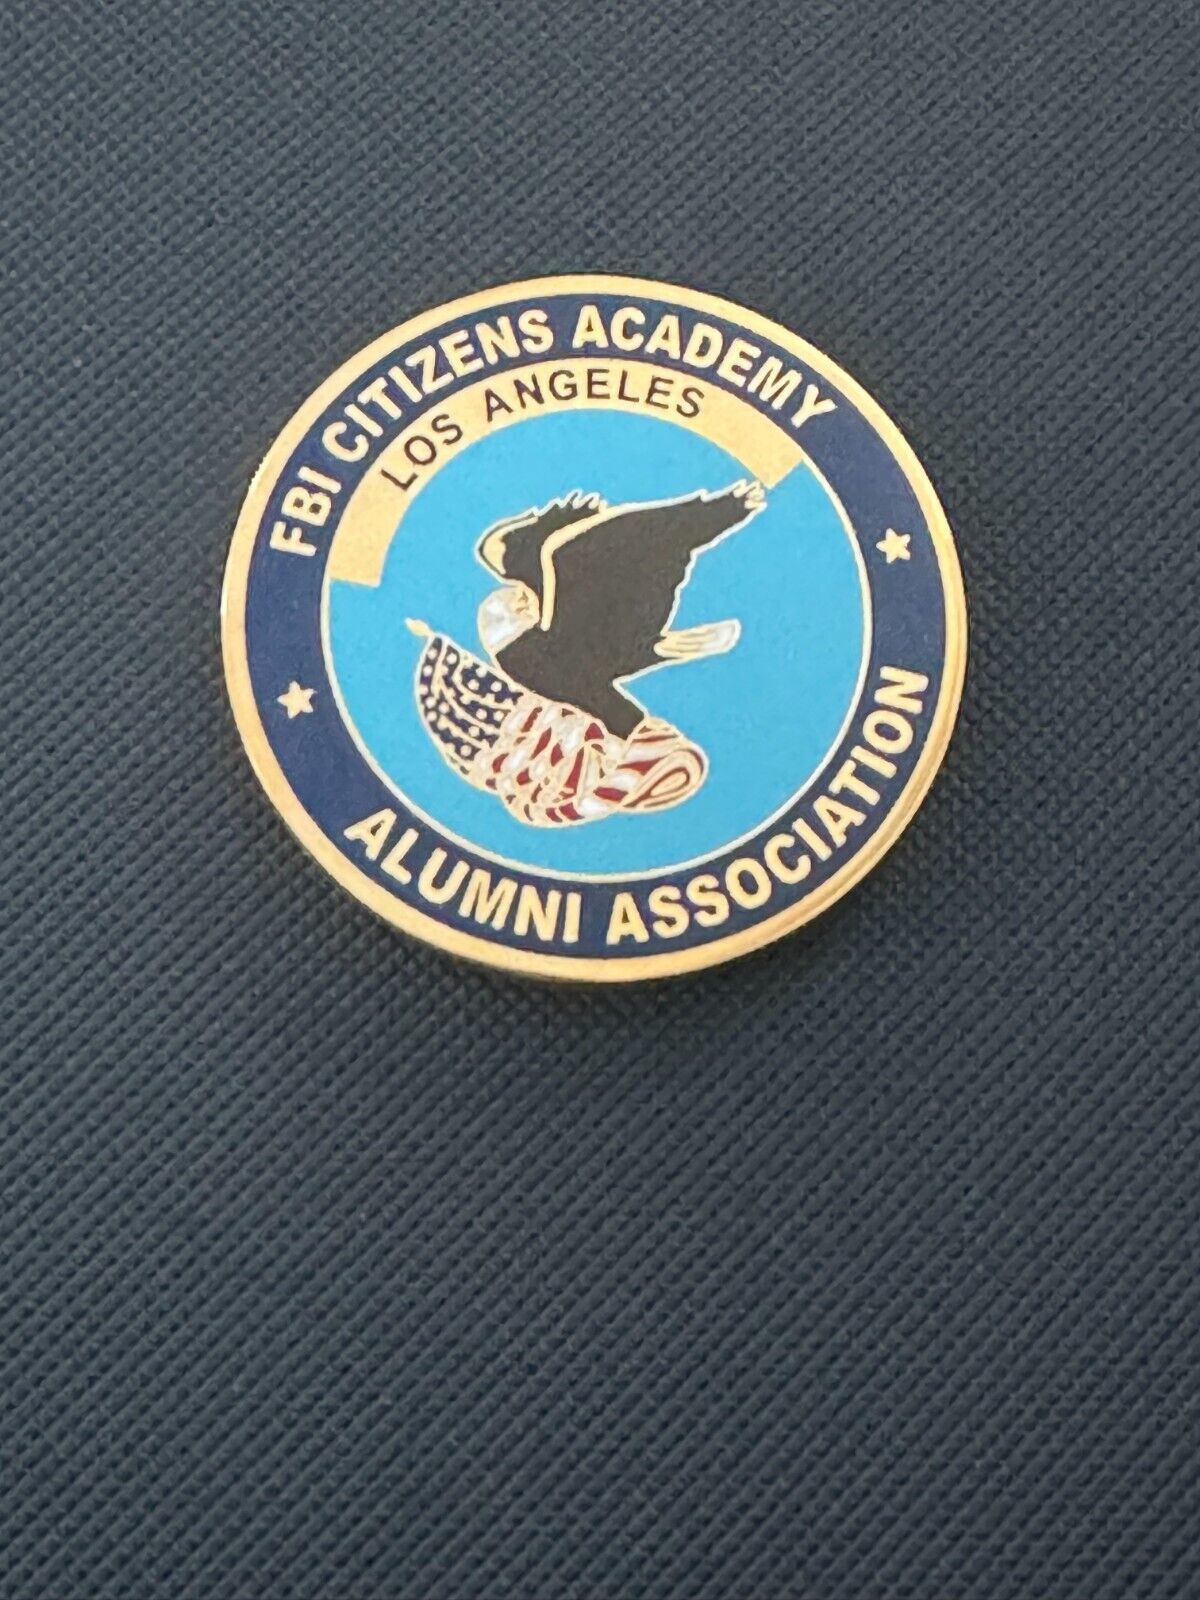 FBI Los Angeles Citizens Academy Alumni Association Challenge Coin